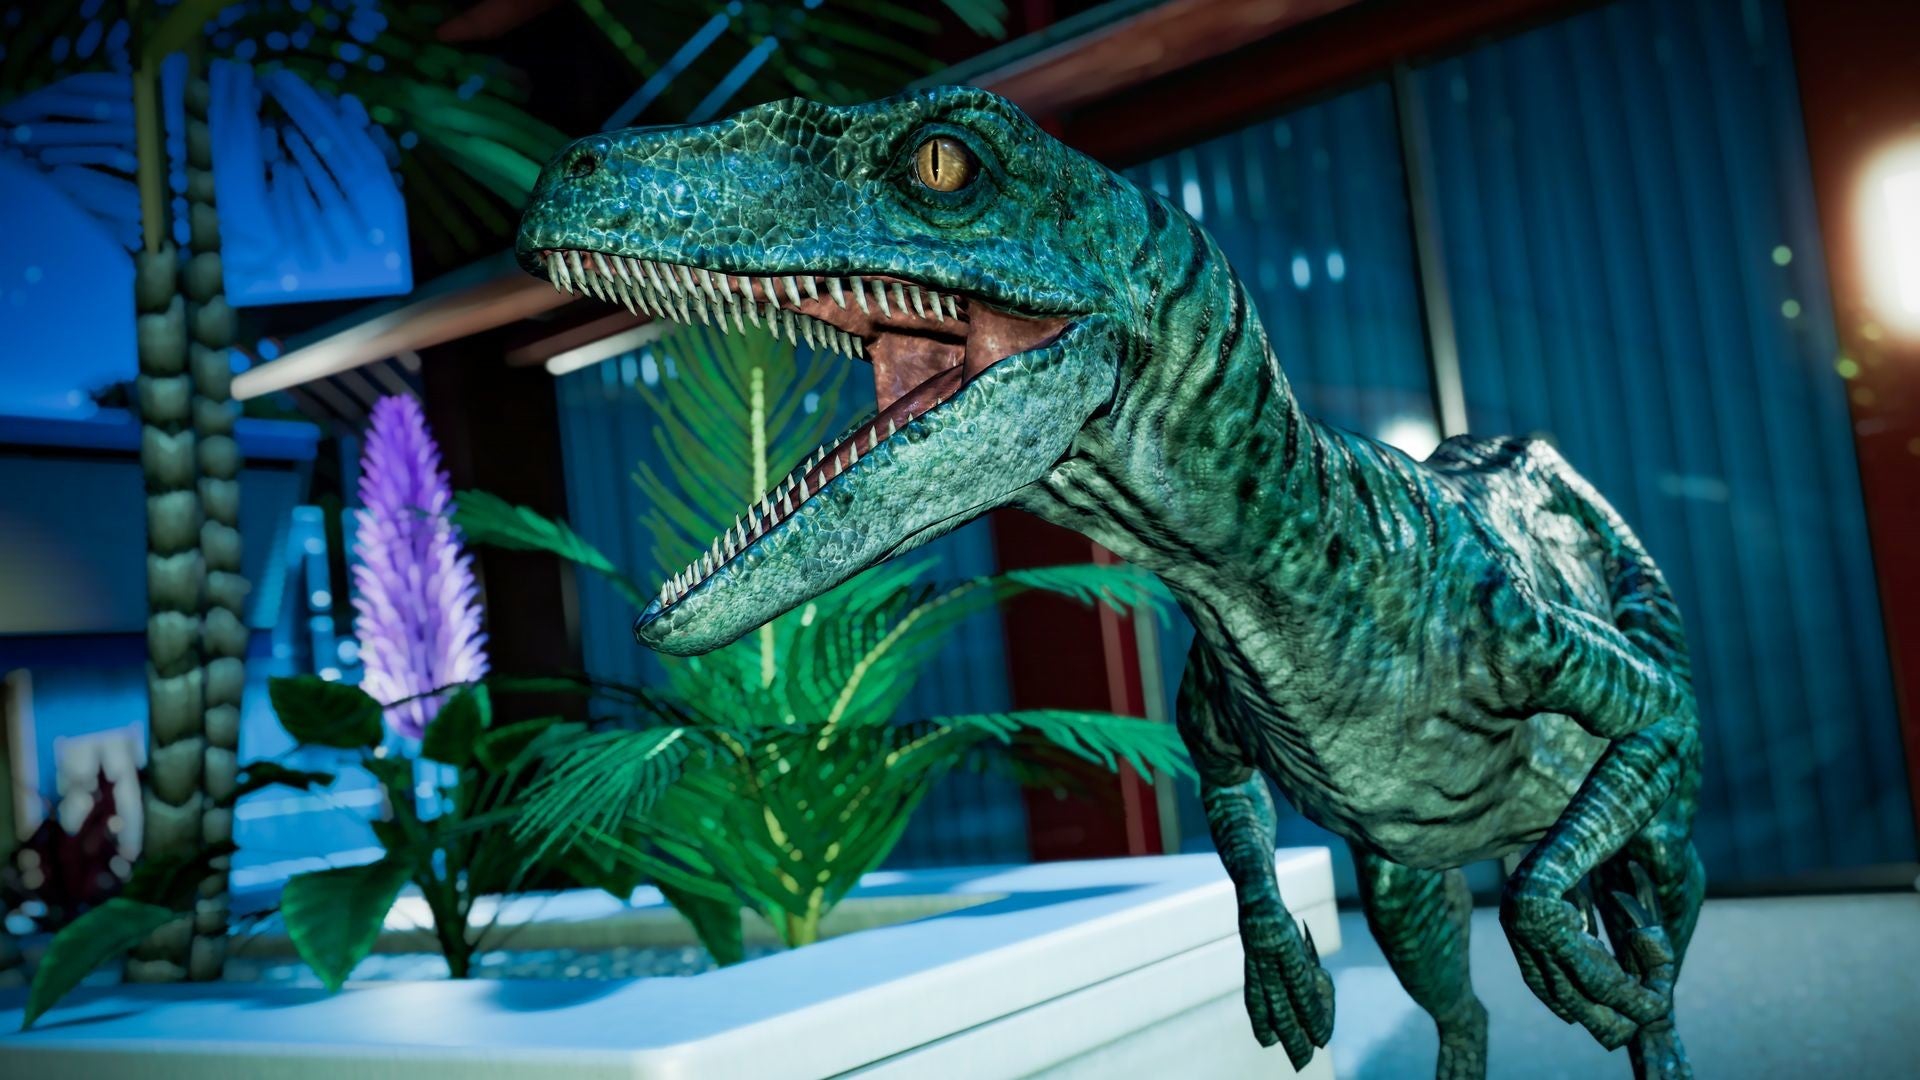 Jurassic World Evolution: Raptor Squad Skin Collection DLC